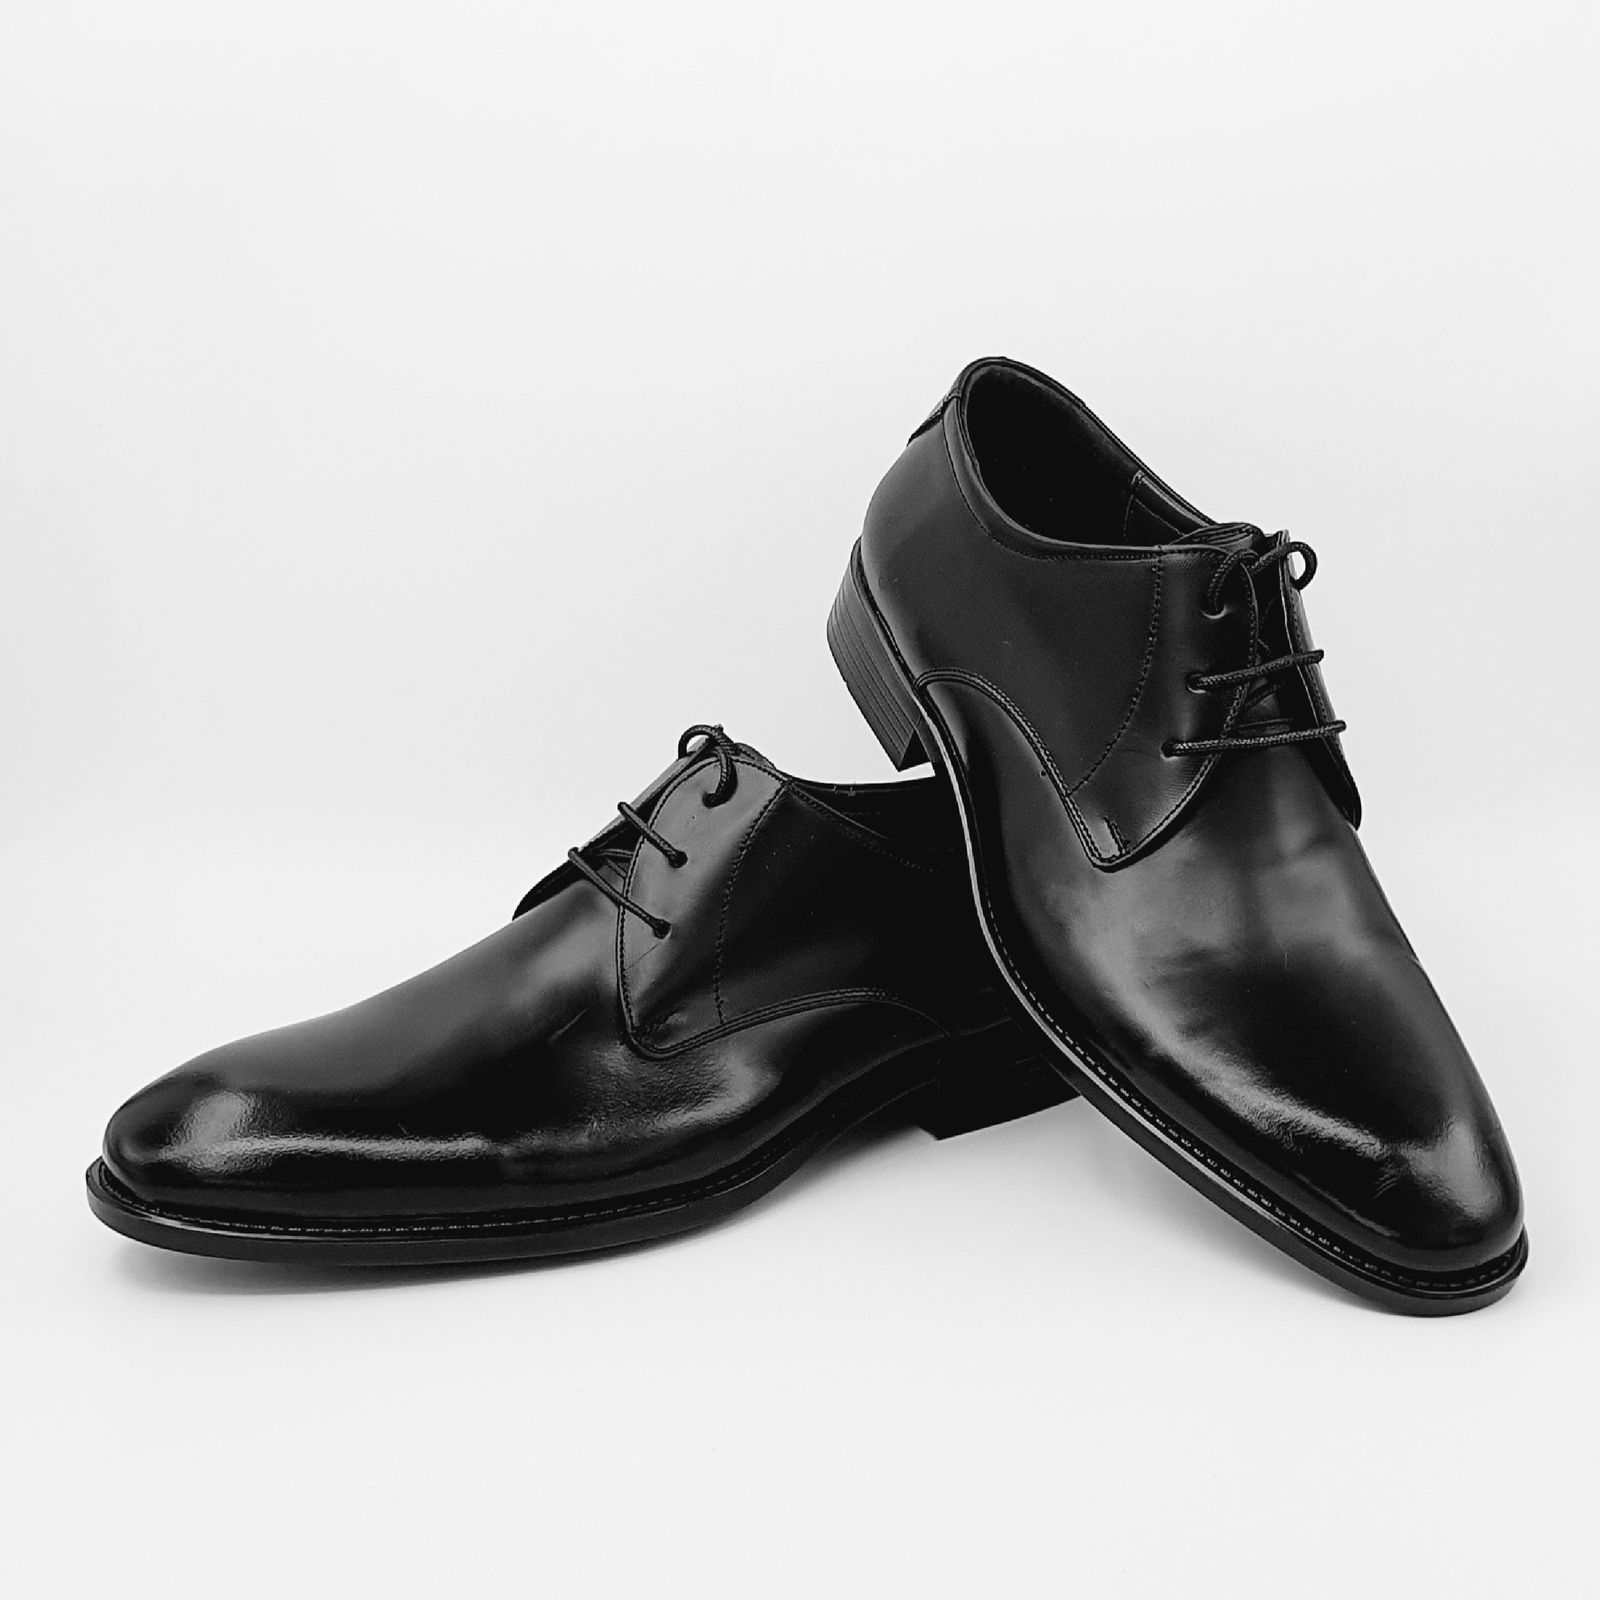 کفش مردانه گالا مدل BS کد D1109 -  - 6